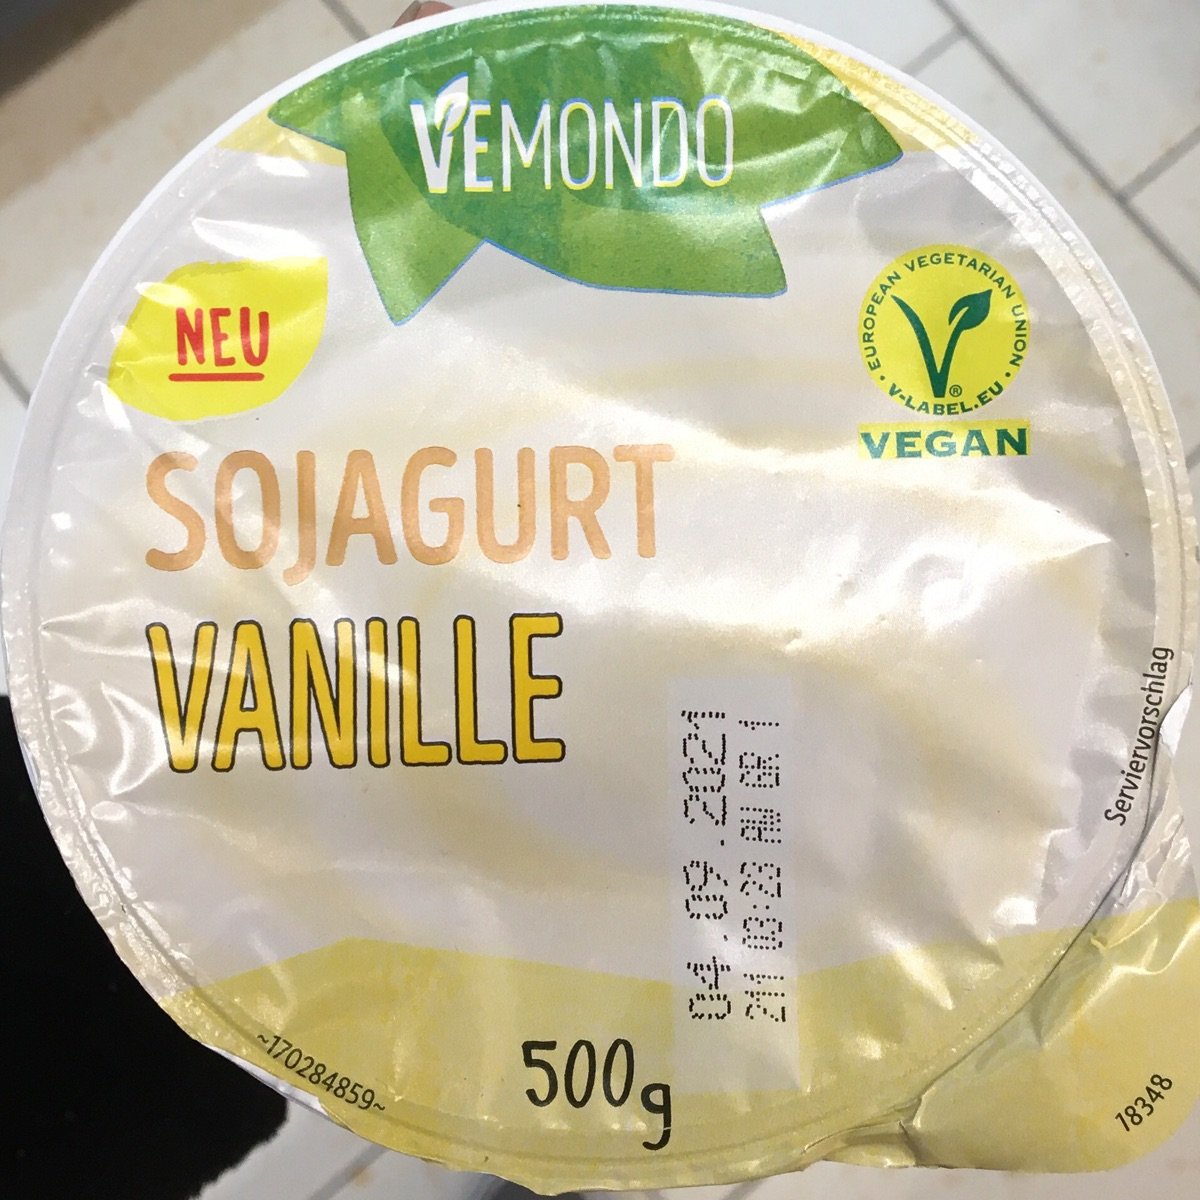 Vemondo Sojagurt Vanille Review | abillion